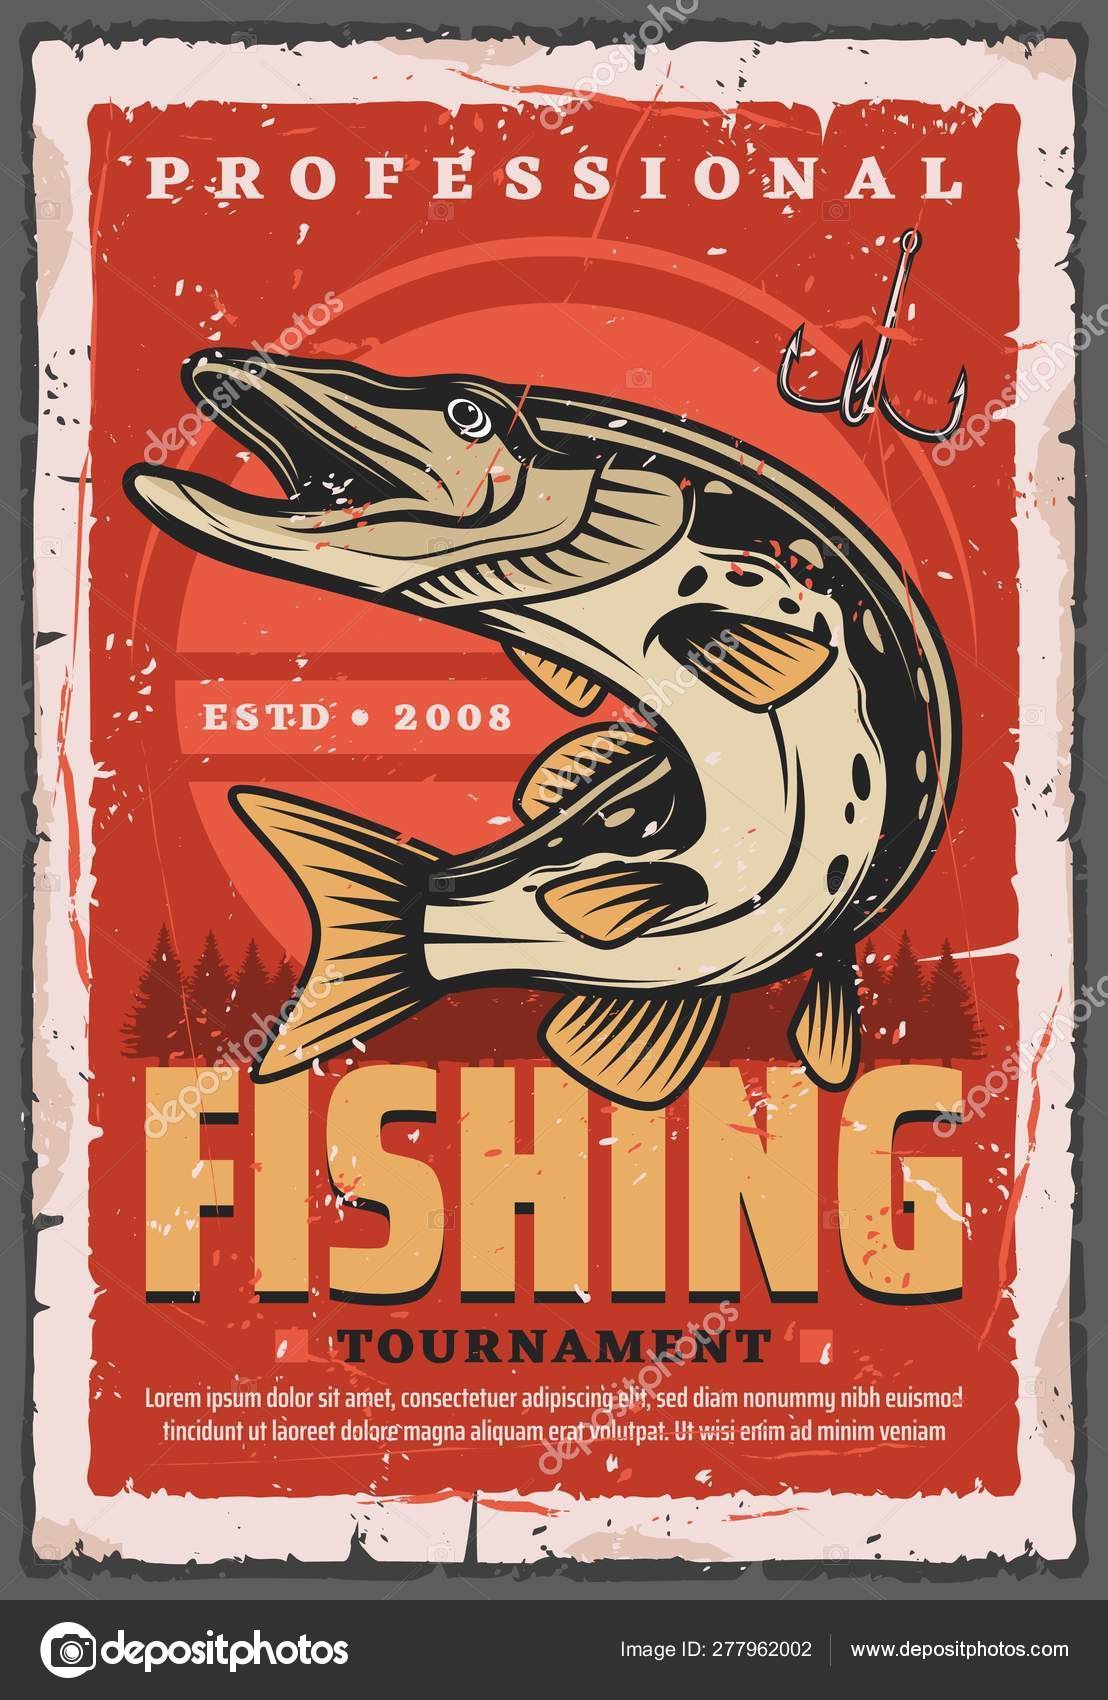 https://st4.depositphotos.com/1020070/27796/v/1600/depositphotos_277962002-stock-illustration-fishing-hook-pike-fish-and.jpg